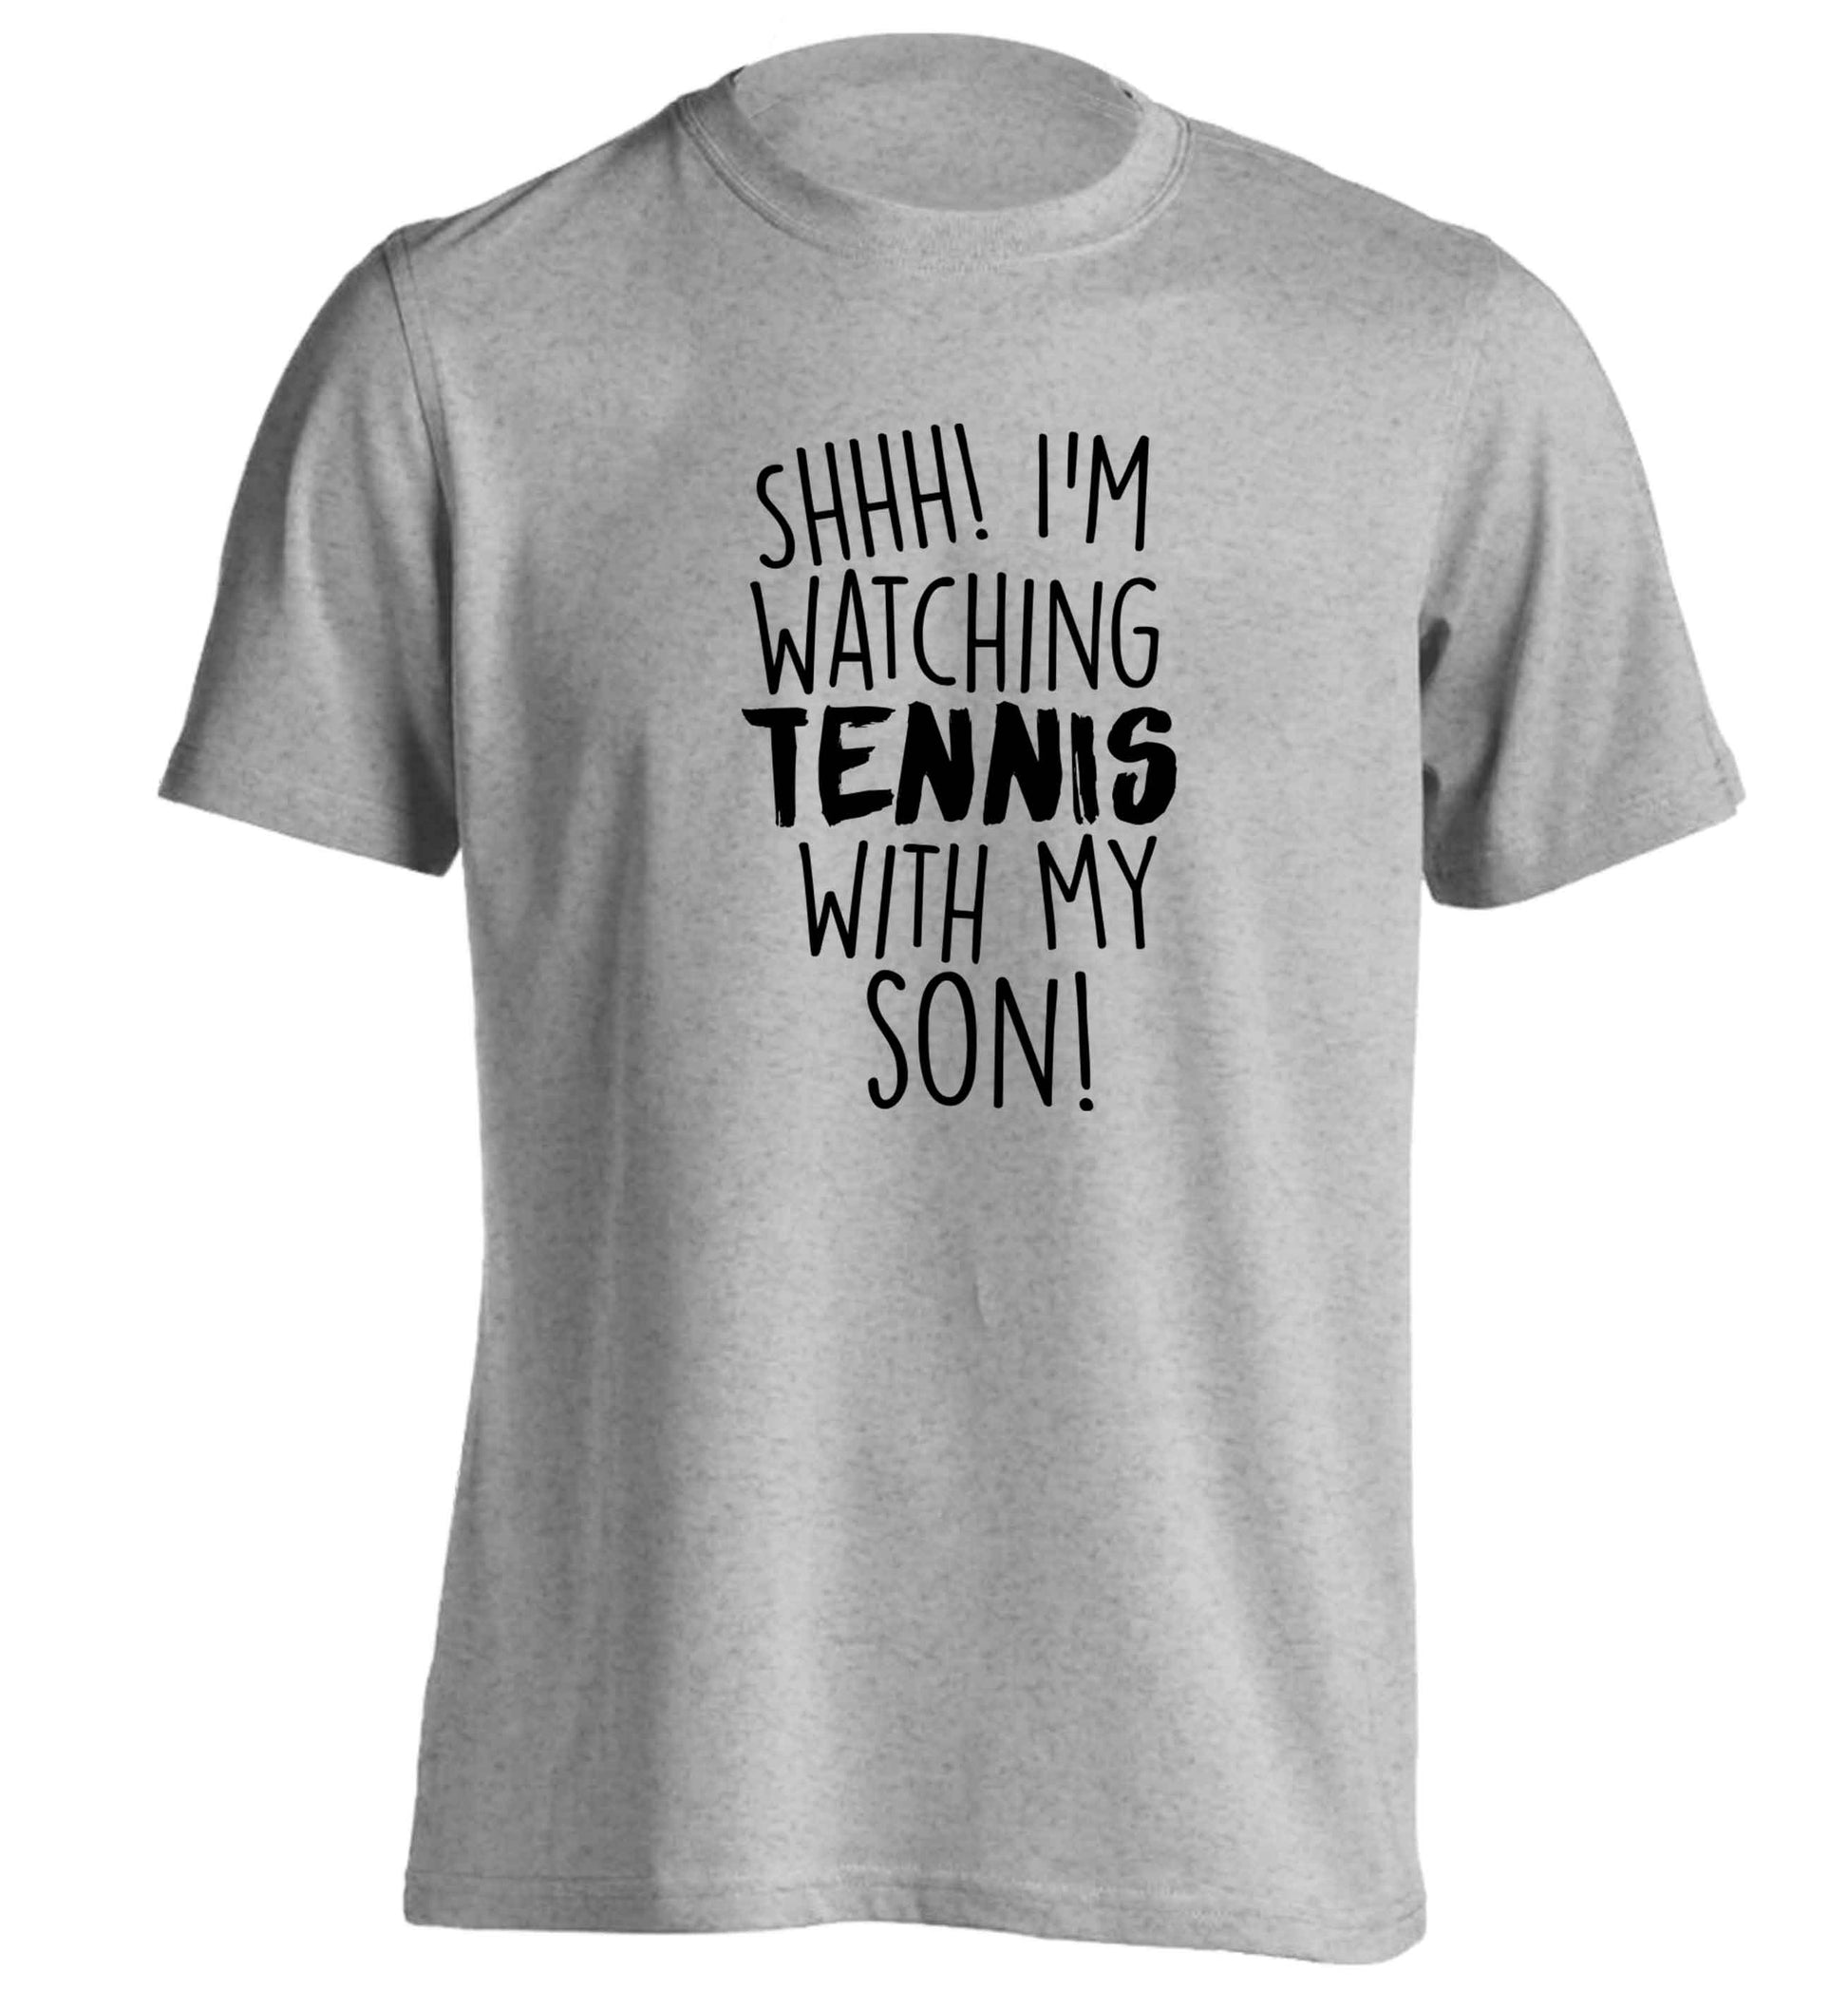 Shh! I'm watching tennis with my son! adults unisex grey Tshirt 2XL